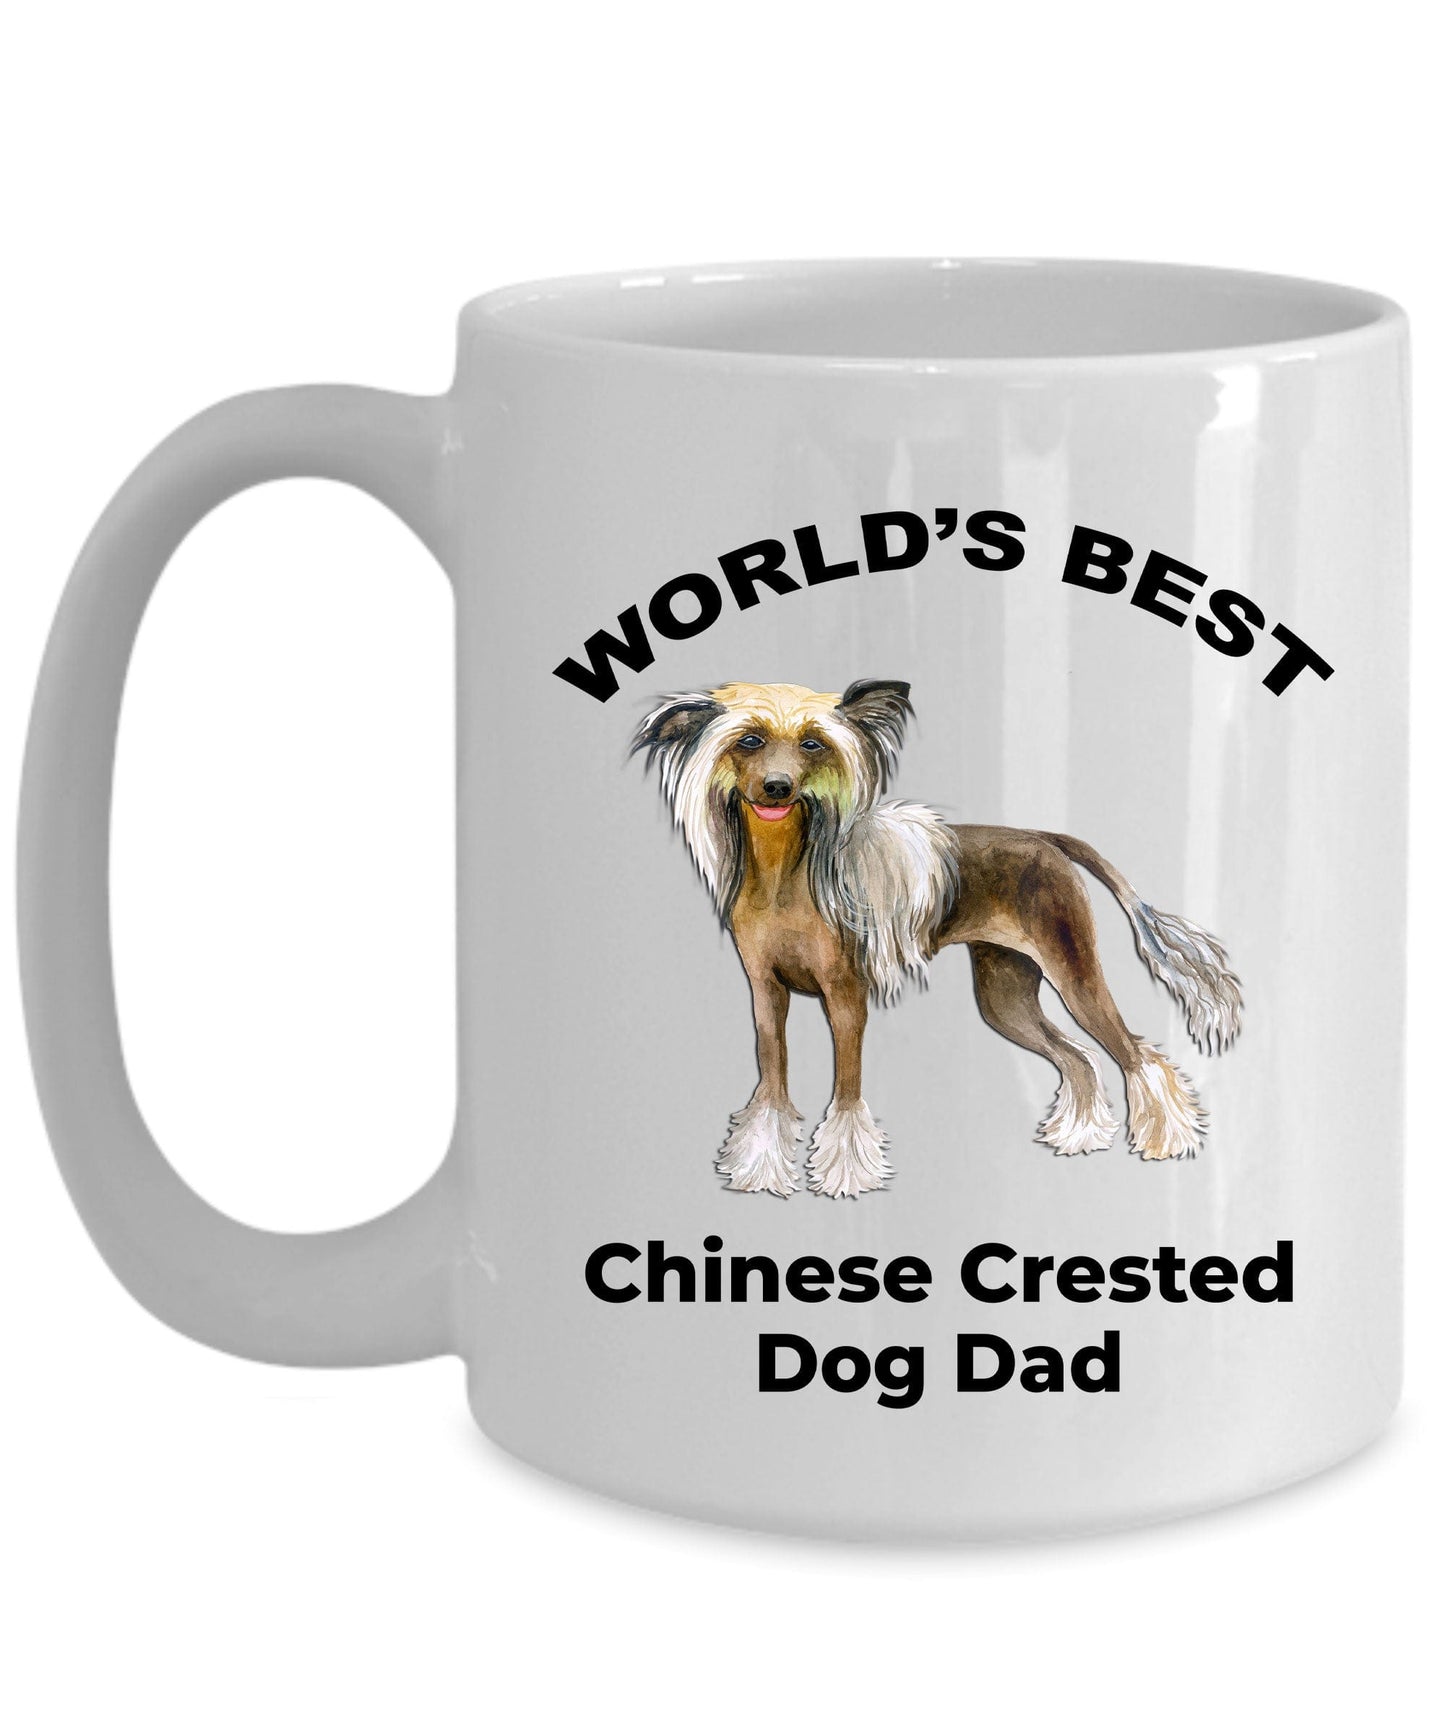 Chinese Crested World's Best Dog Dad ceramic coffee mug